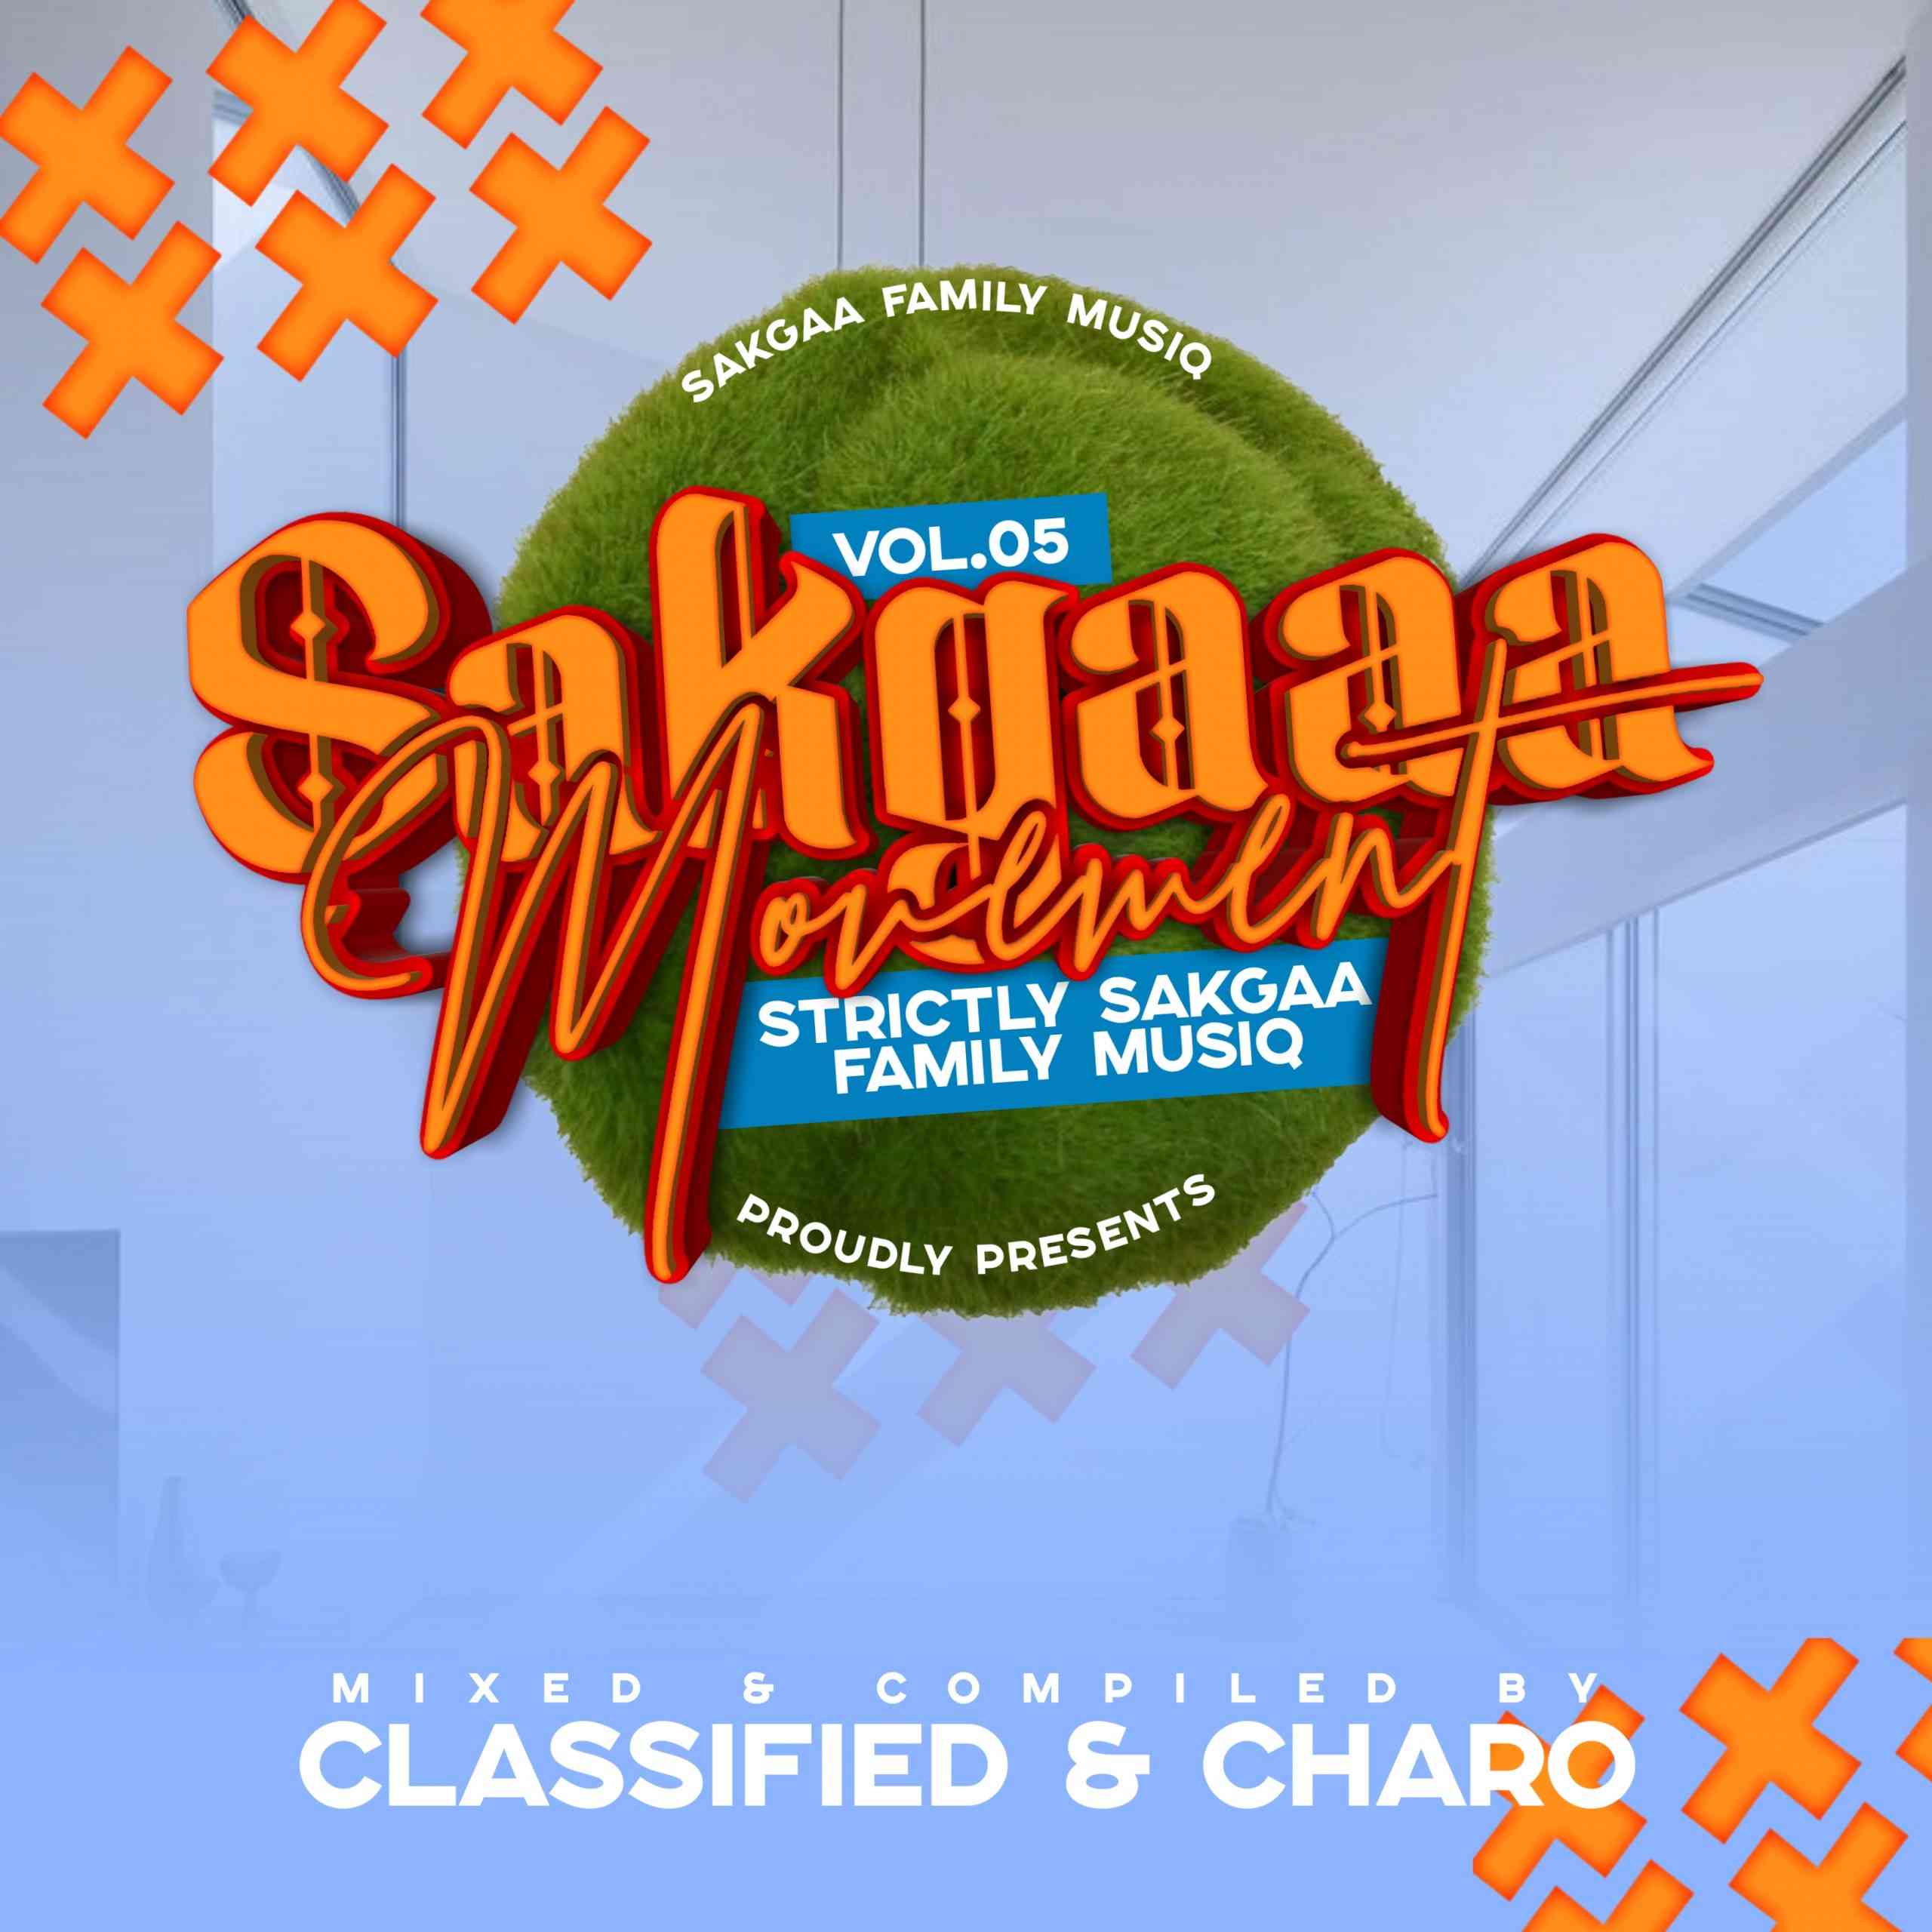 Classified Djy & Charo - Sakgaaa Movement vol. 5 Mix 